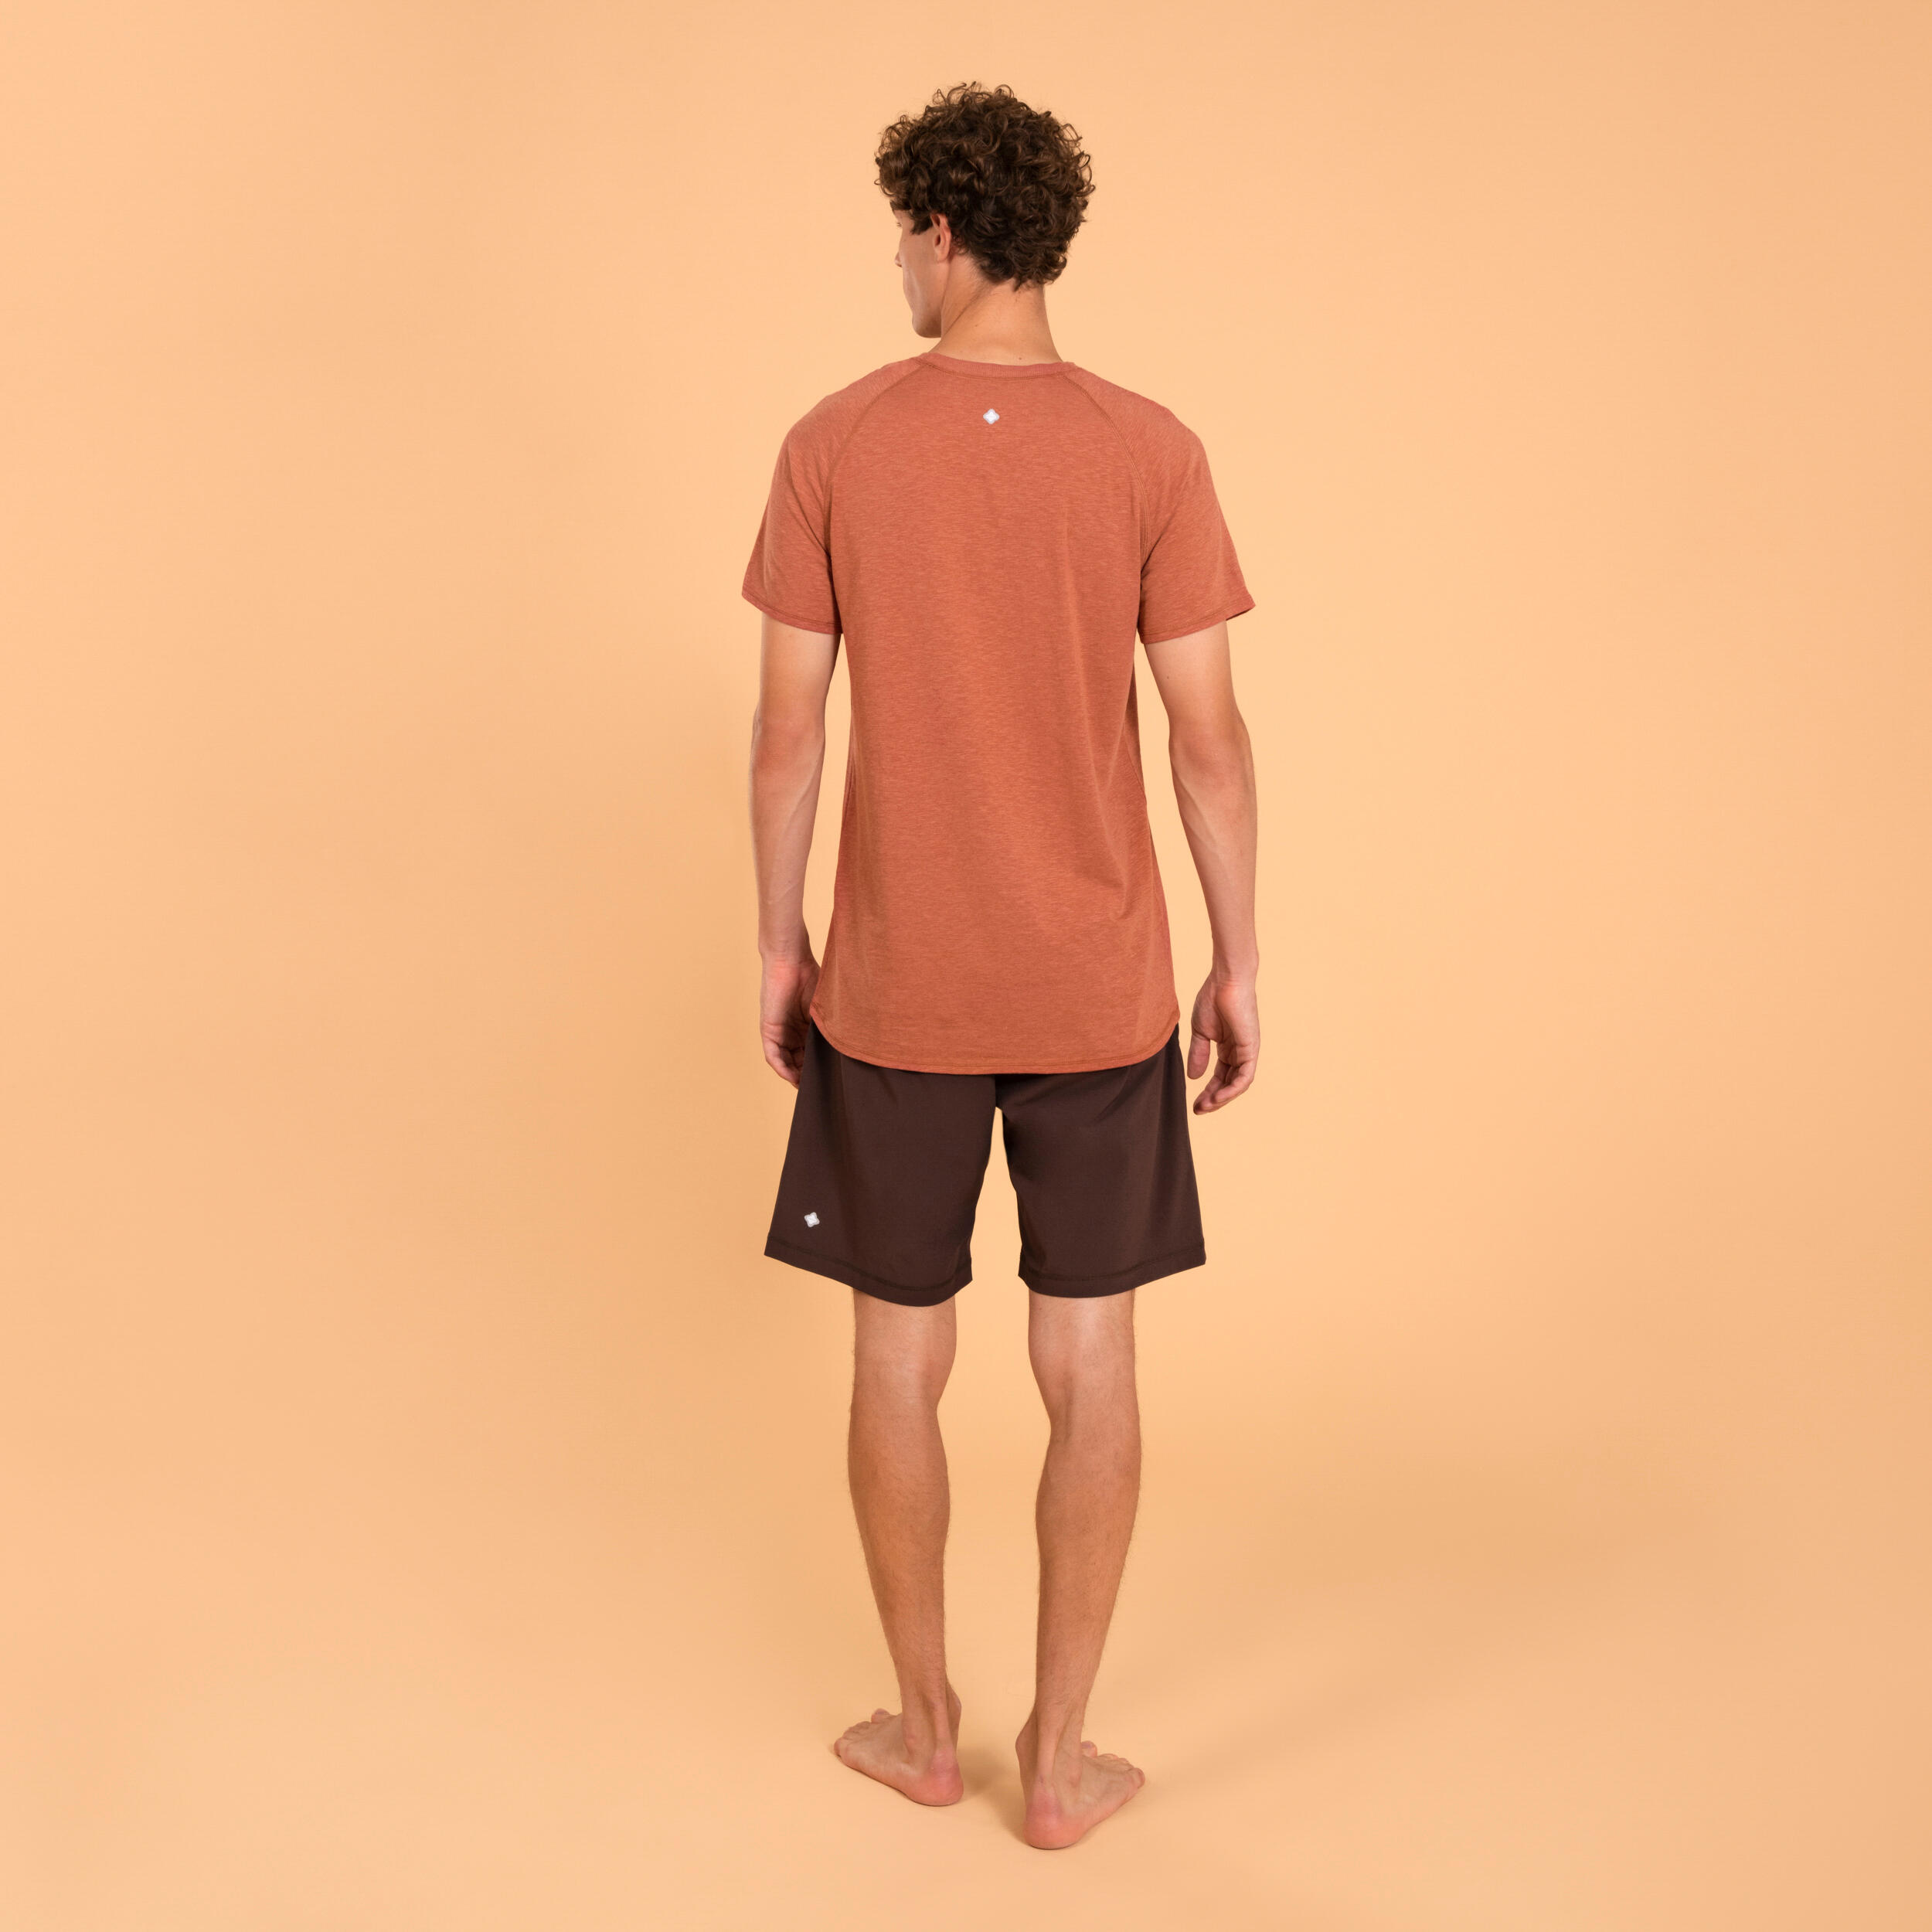 Men's Short-Sleeved Gentle Yoga T-Shirt in Fabric - Terracotta 5/5